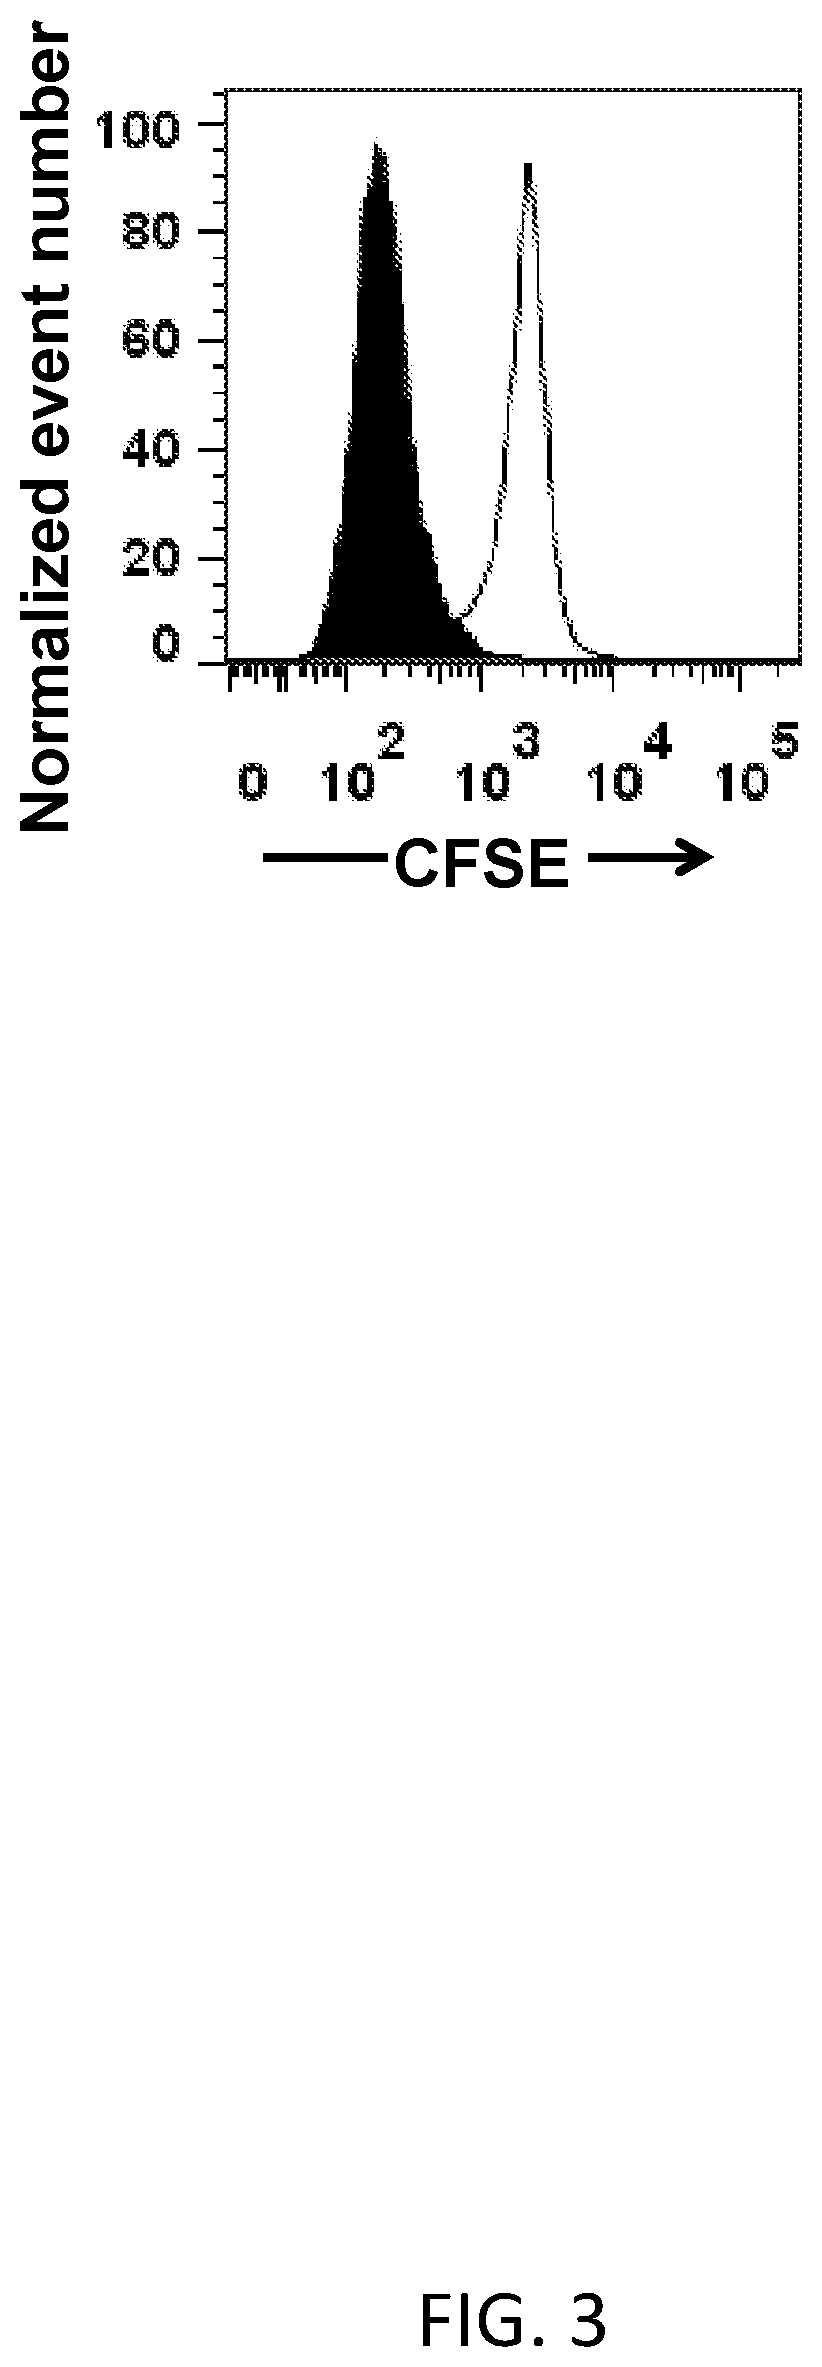 Anti-CD30 chimeric antigen receptors